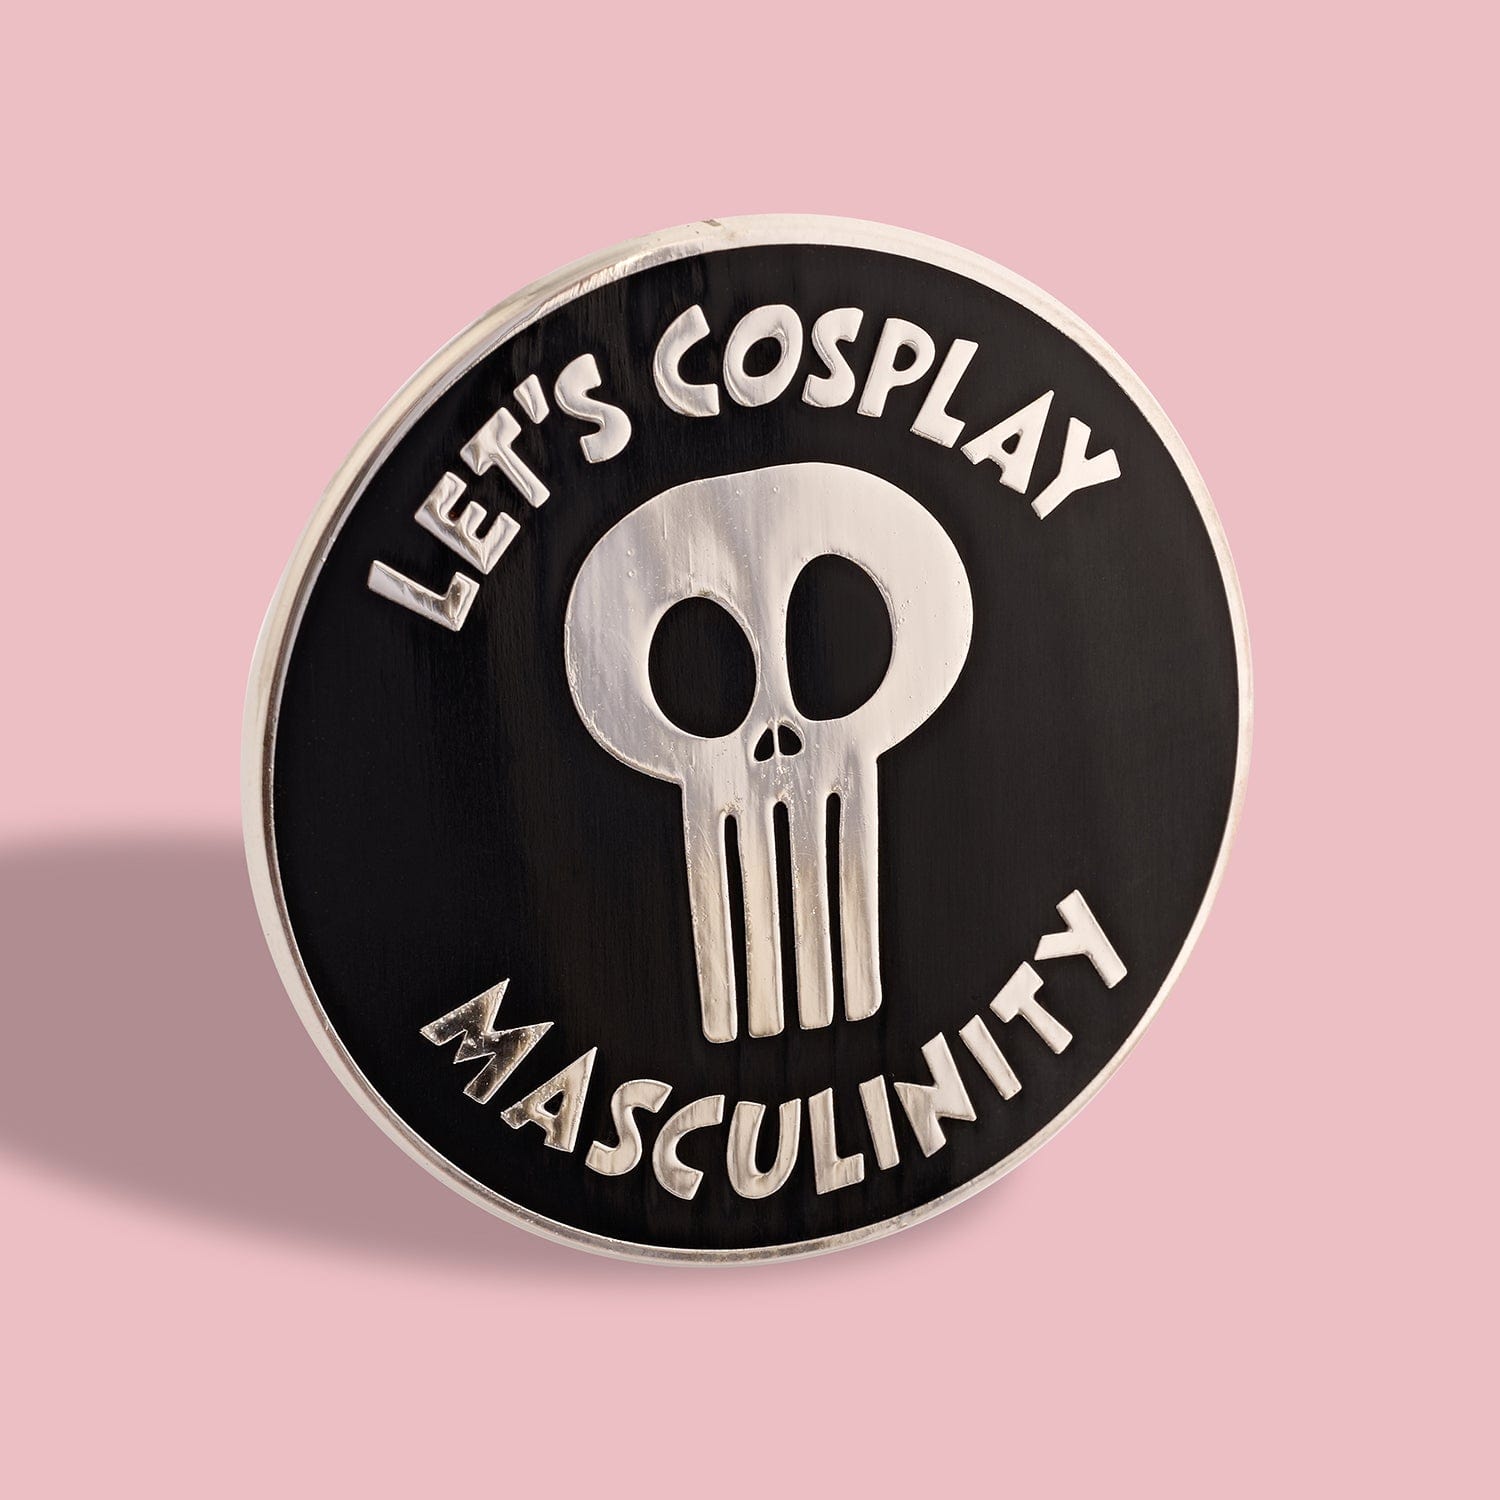 Let's Cosplay Masculinity Enamel Pin